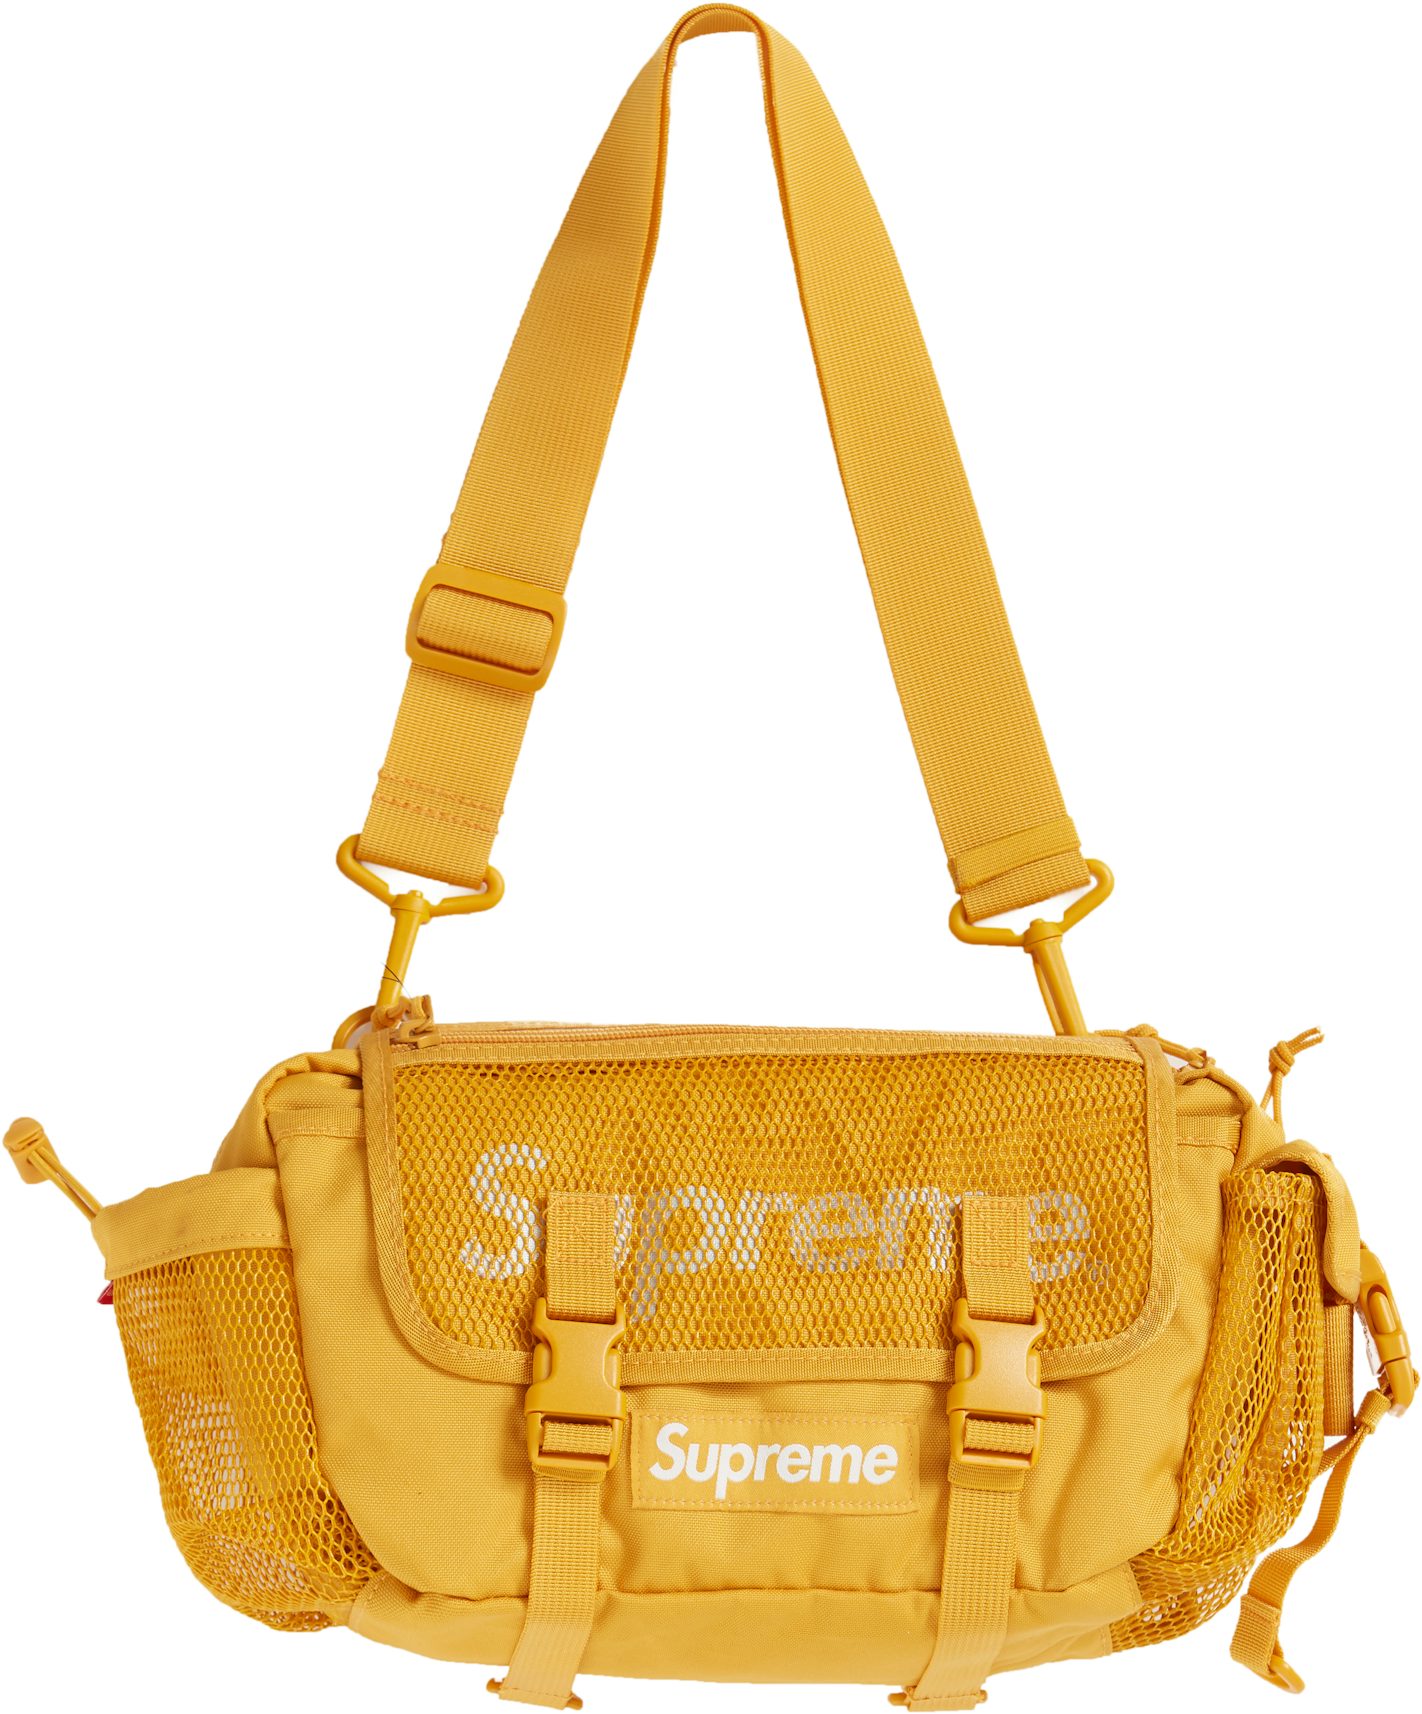 Ss20+Supreme+Waist+Bag+Black+100+Authentic for sale online